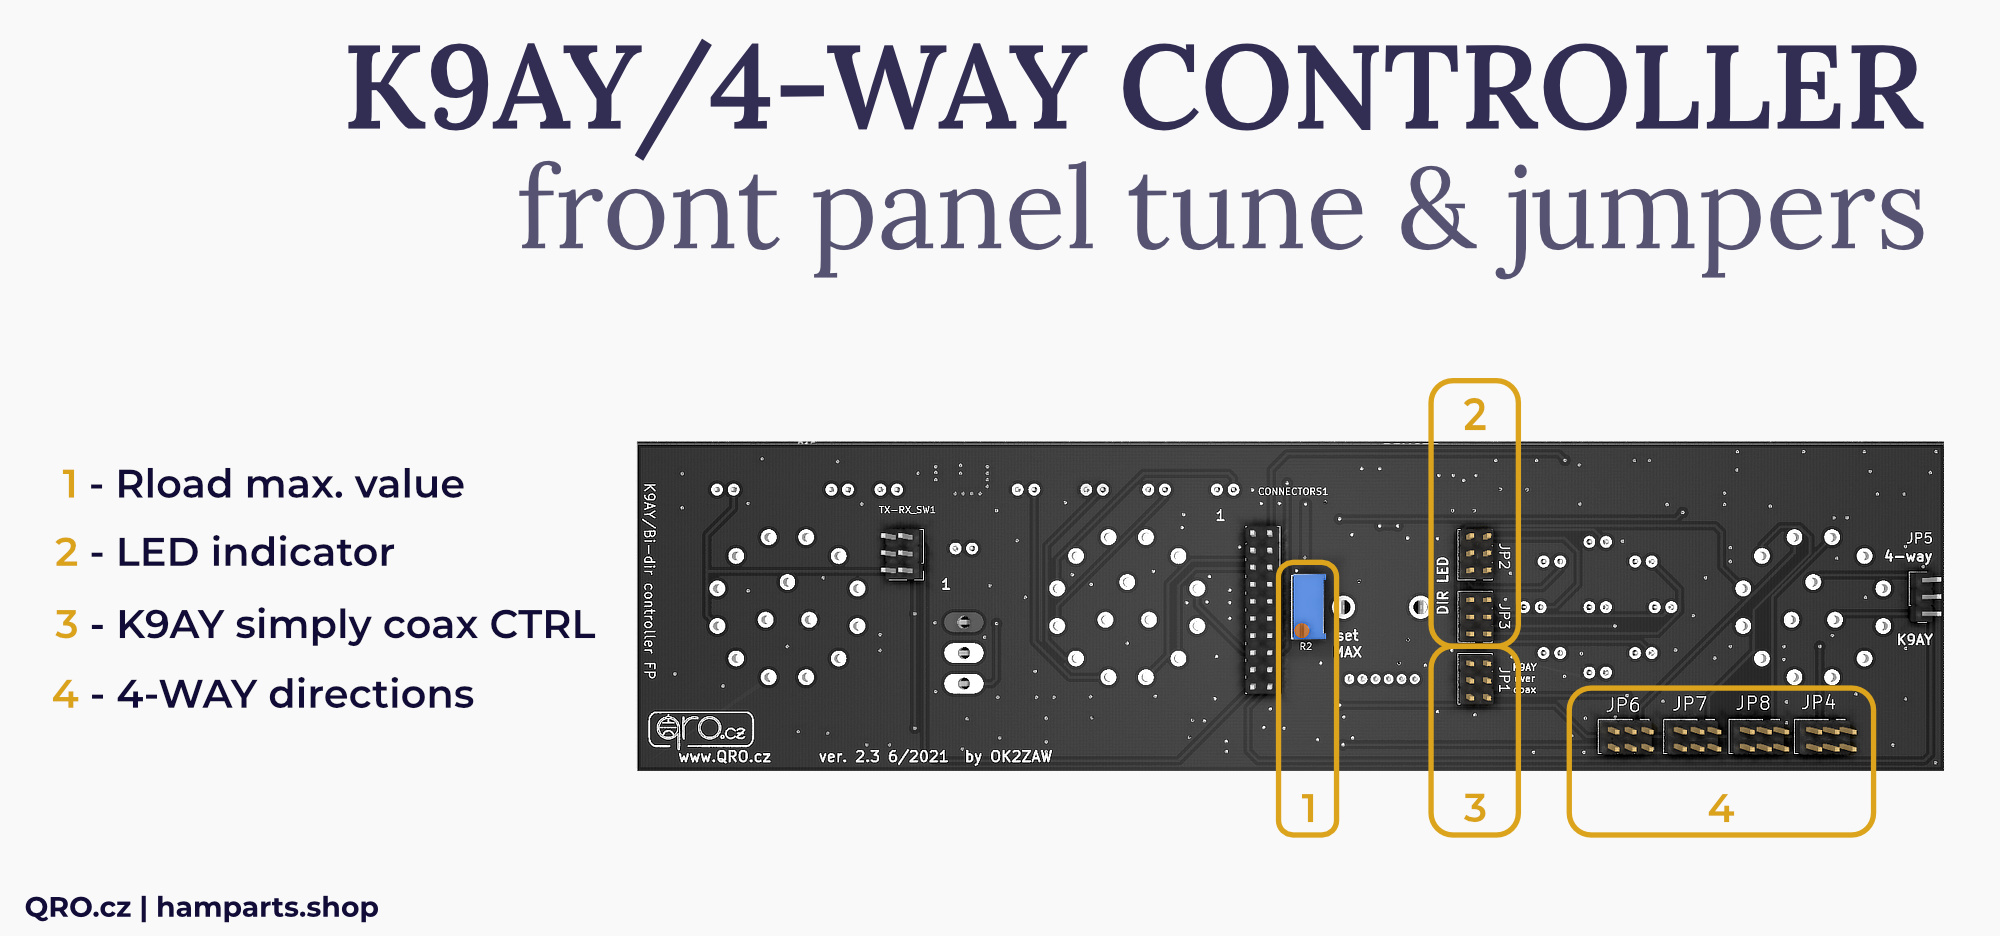 k9ay/4-way controller front panel jumper setting qro.cz hamparts.shop